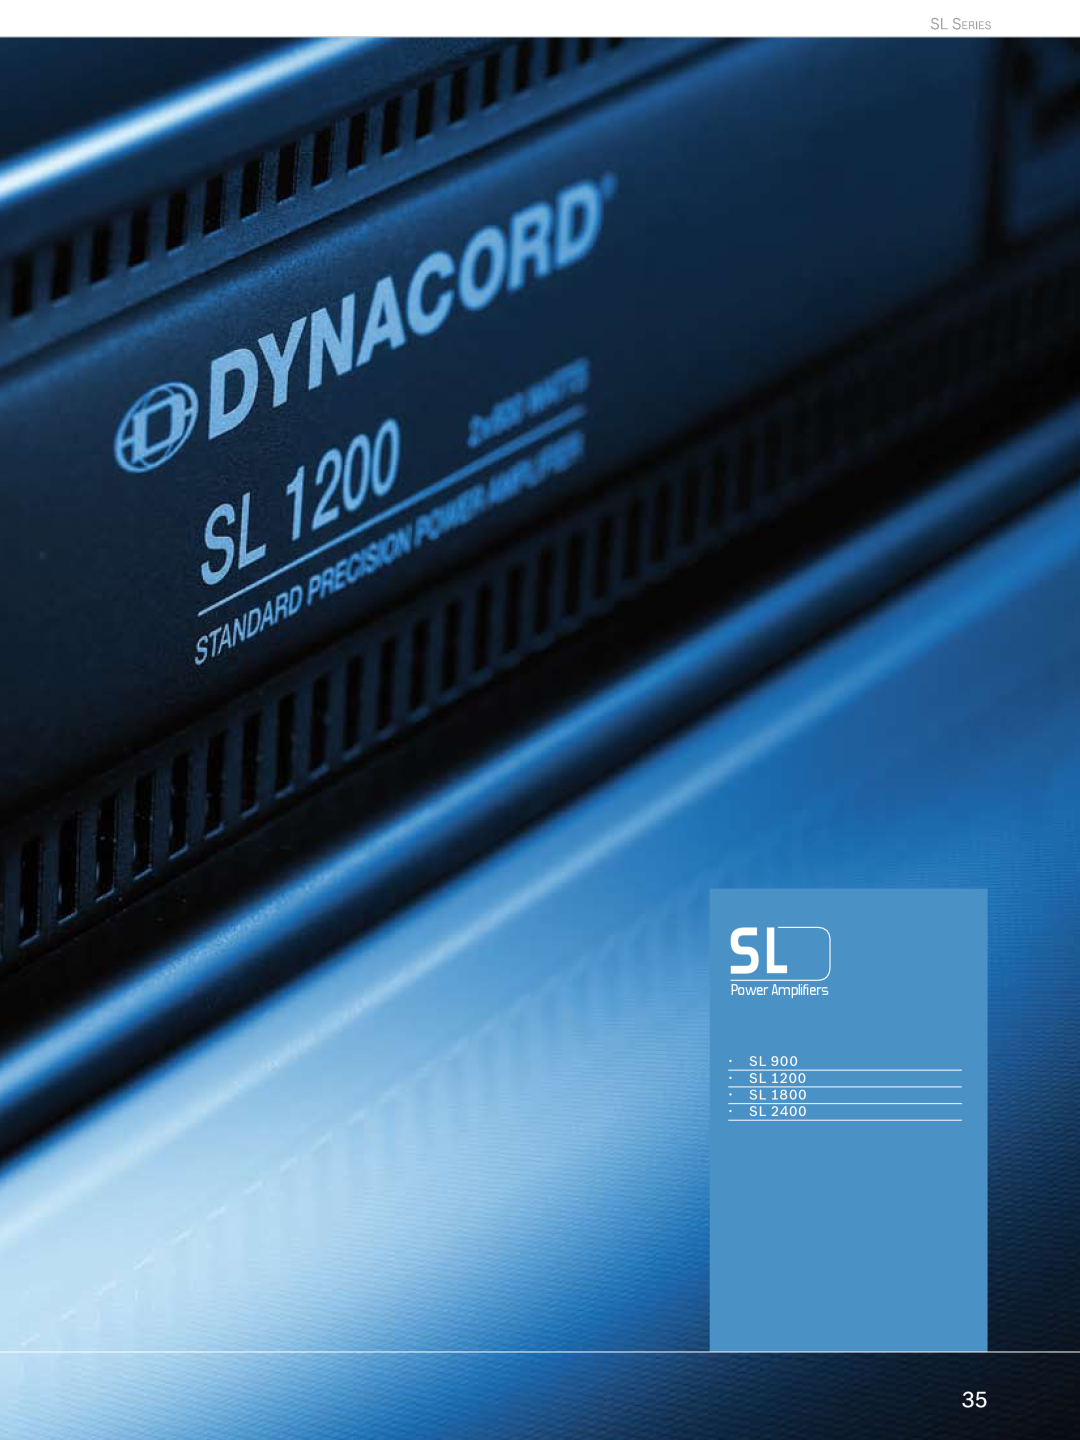 Dynacord Professional Power Amplifiers manual ··Sl ··Sl ··Sl ··Sl, SL Series 